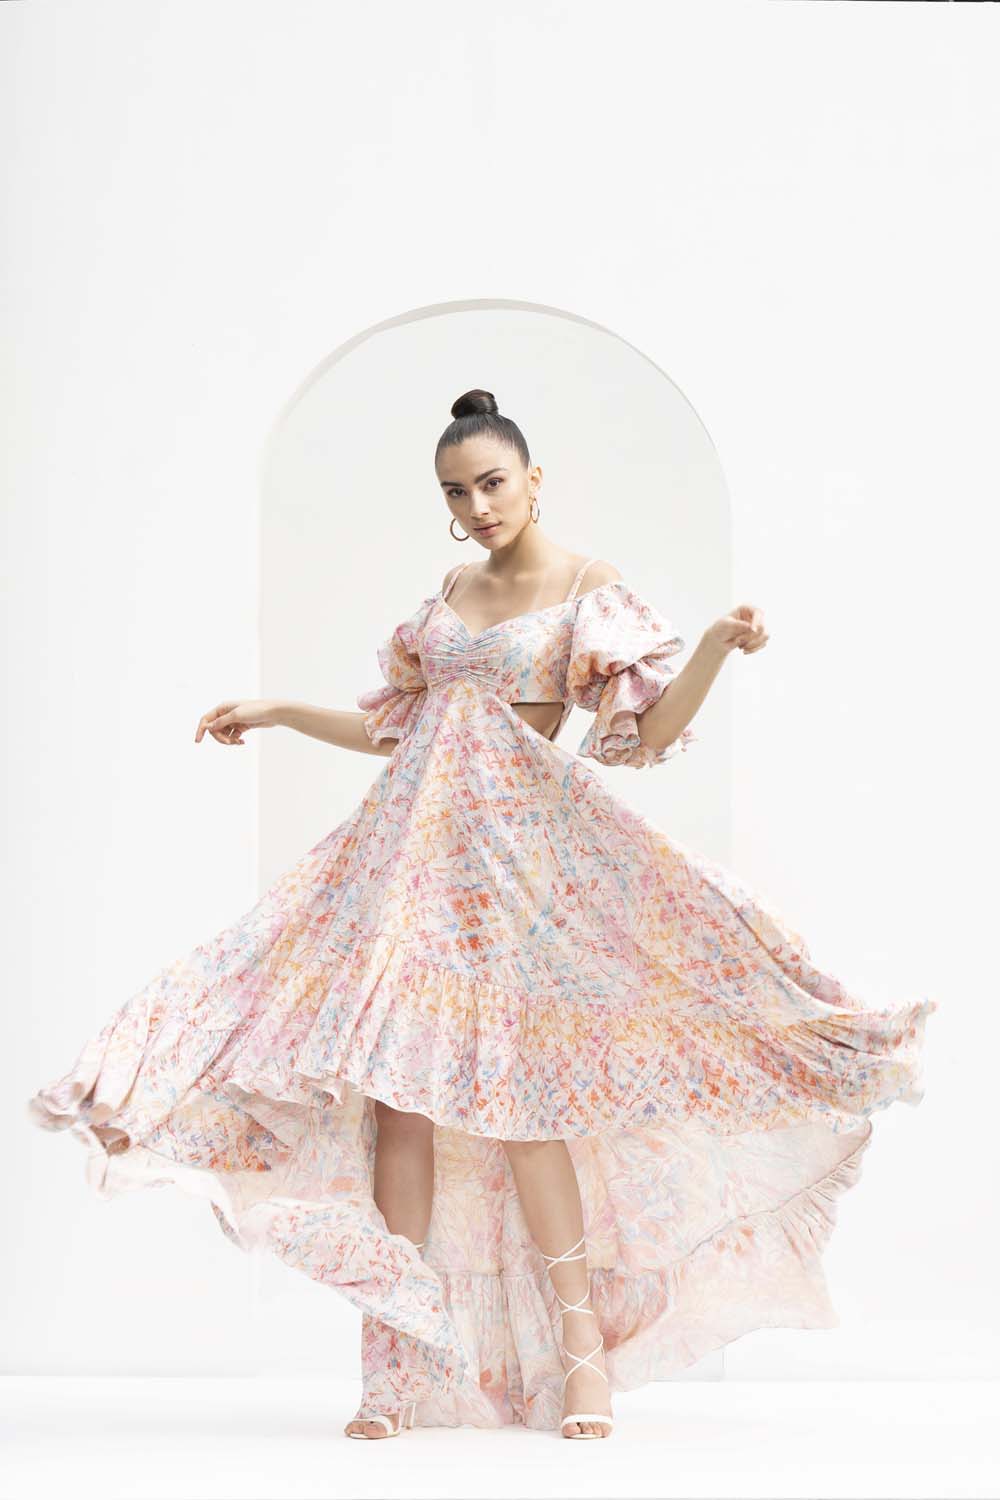 Leaf Magic lurex jacquard printed high-low dress with side cutouts.